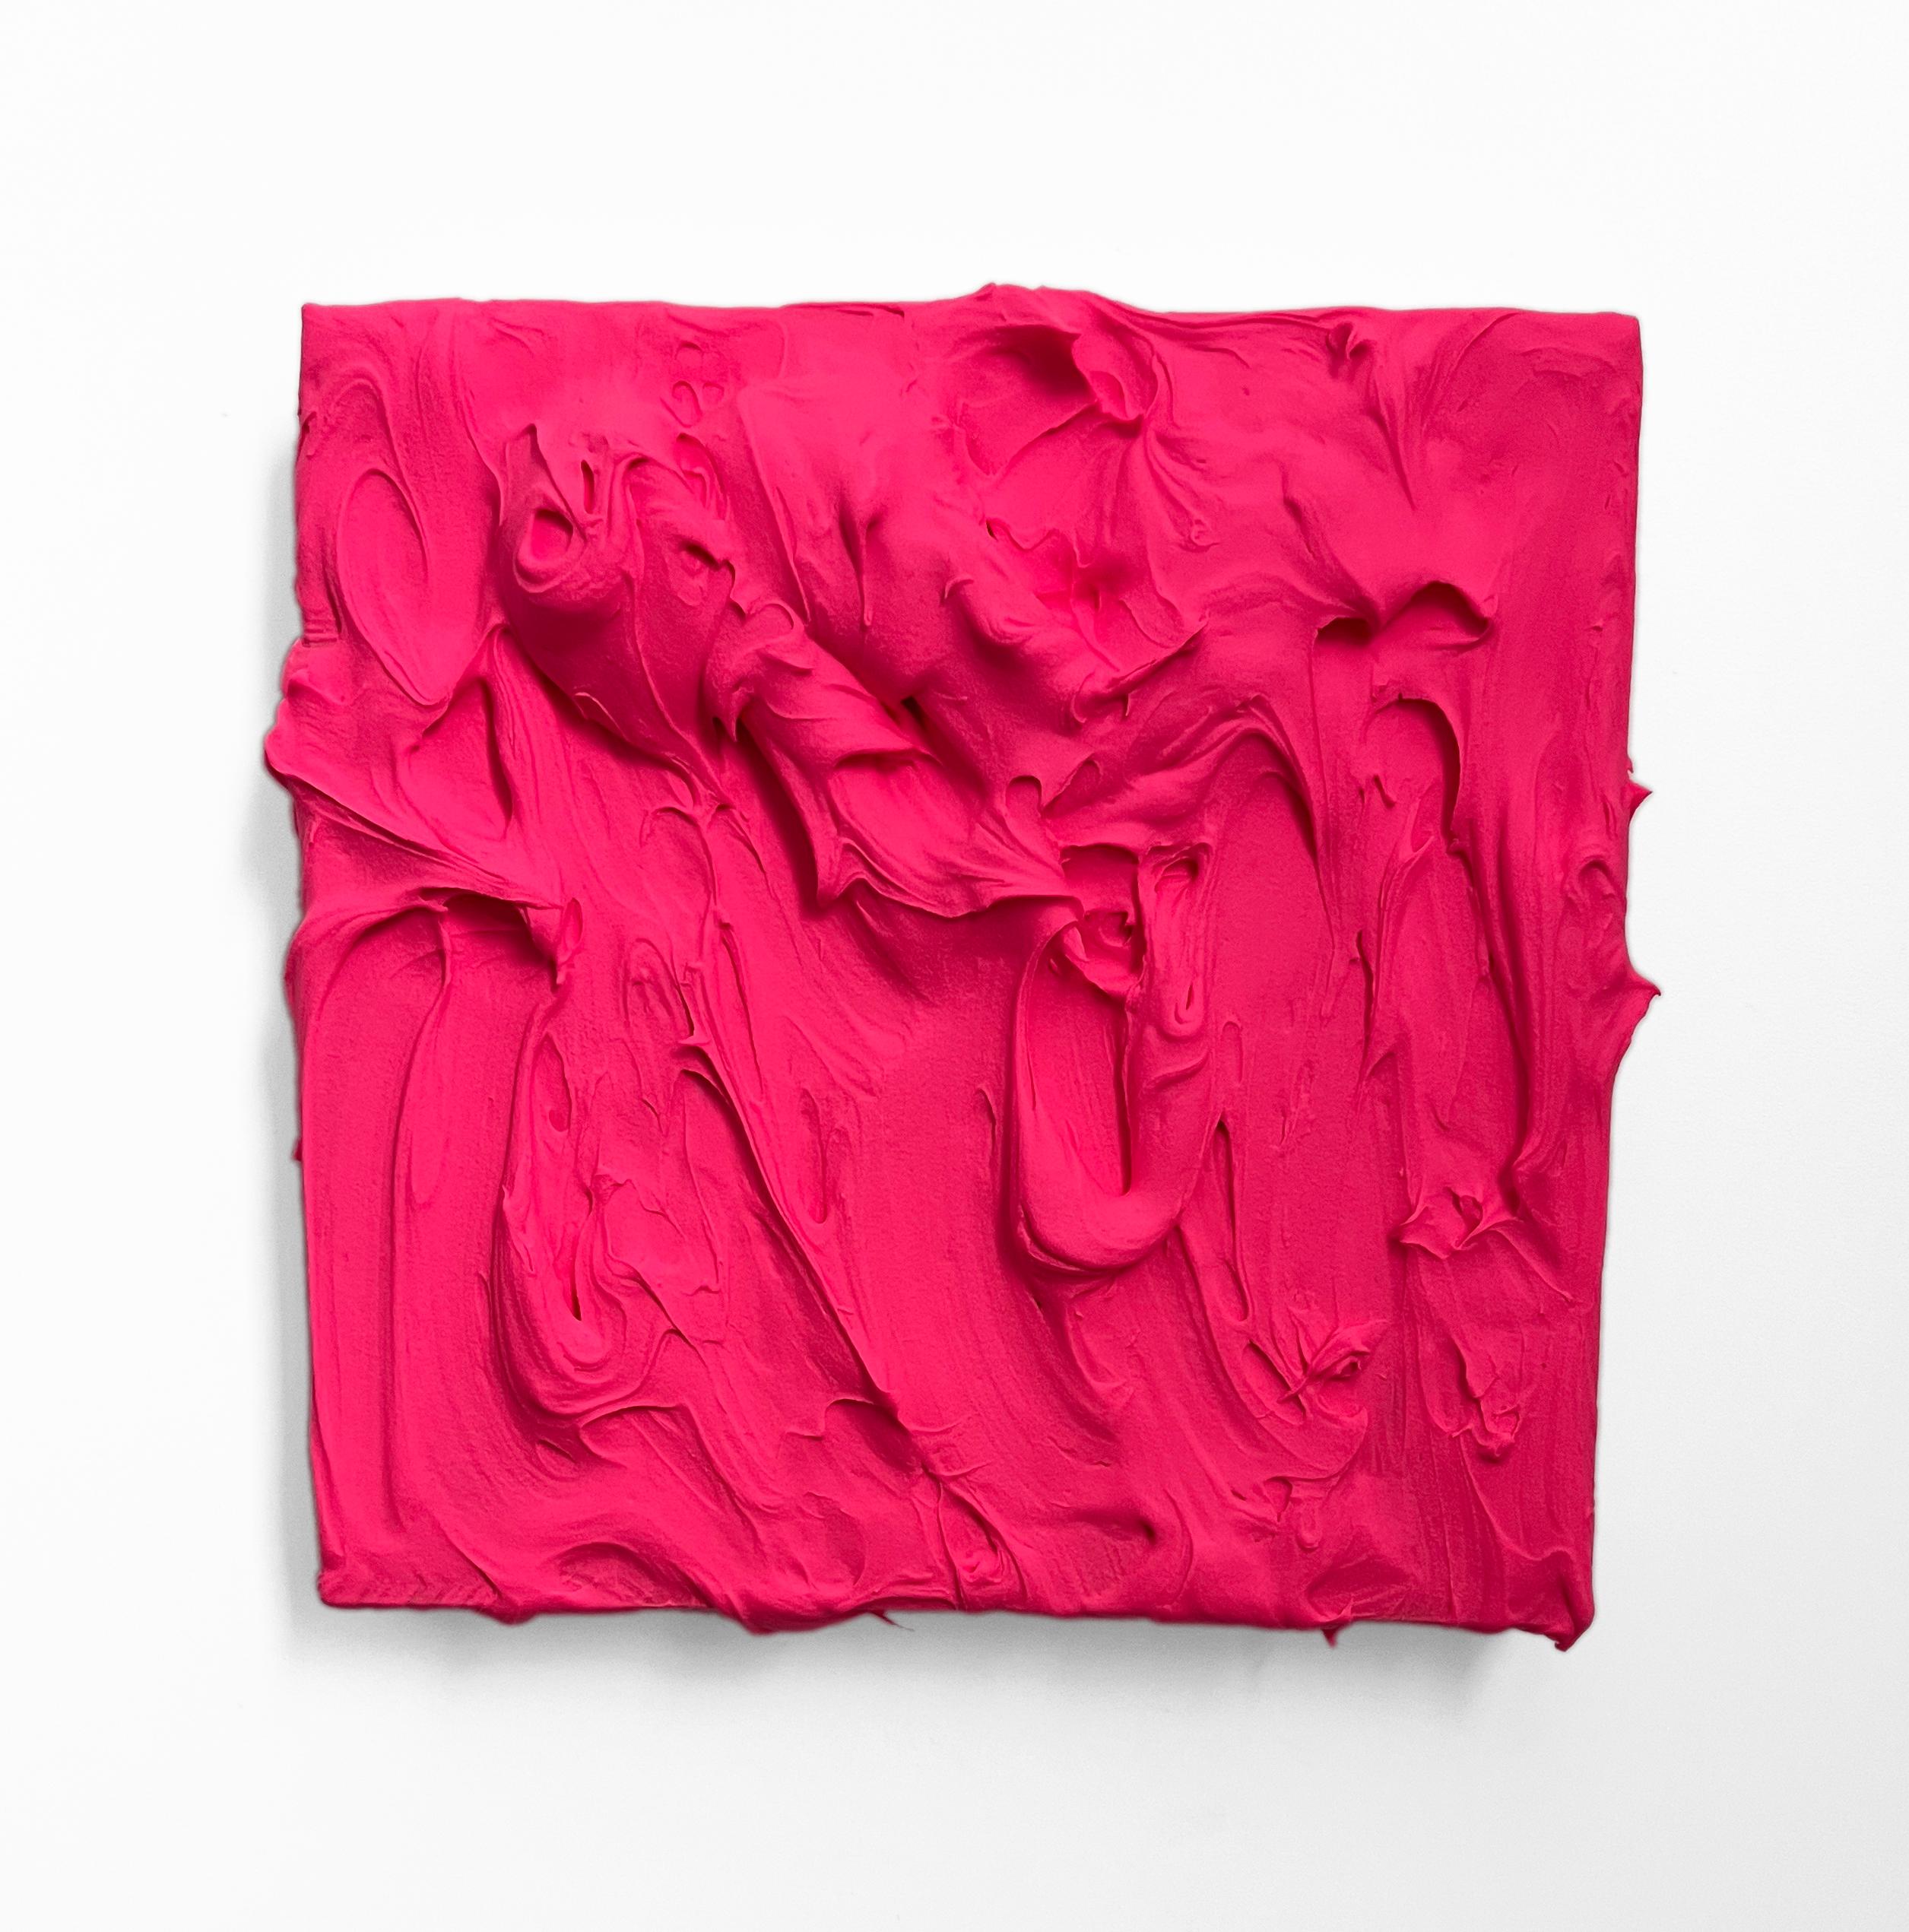 Electric Pink Excess 3 (thick impasto painting monochrome pop art square design)